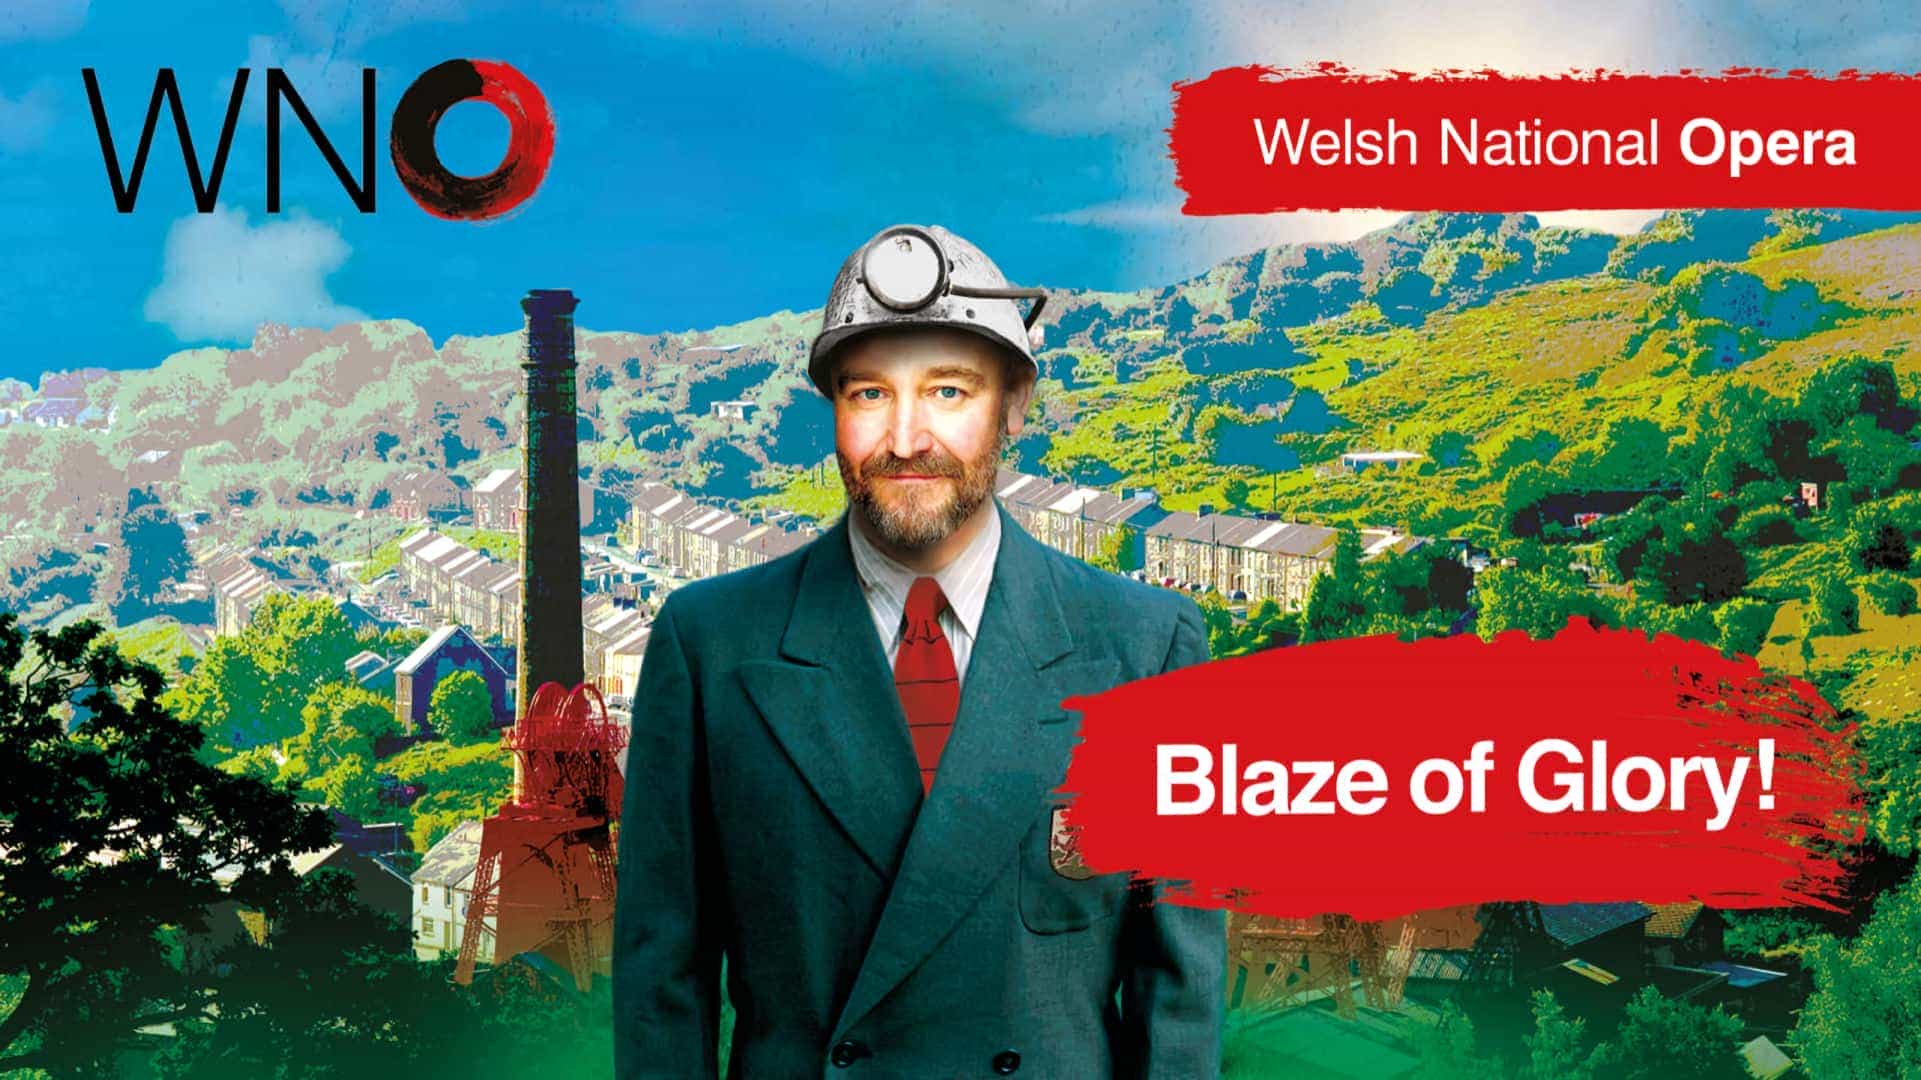 Welsh National Opera - Blaze of Glory